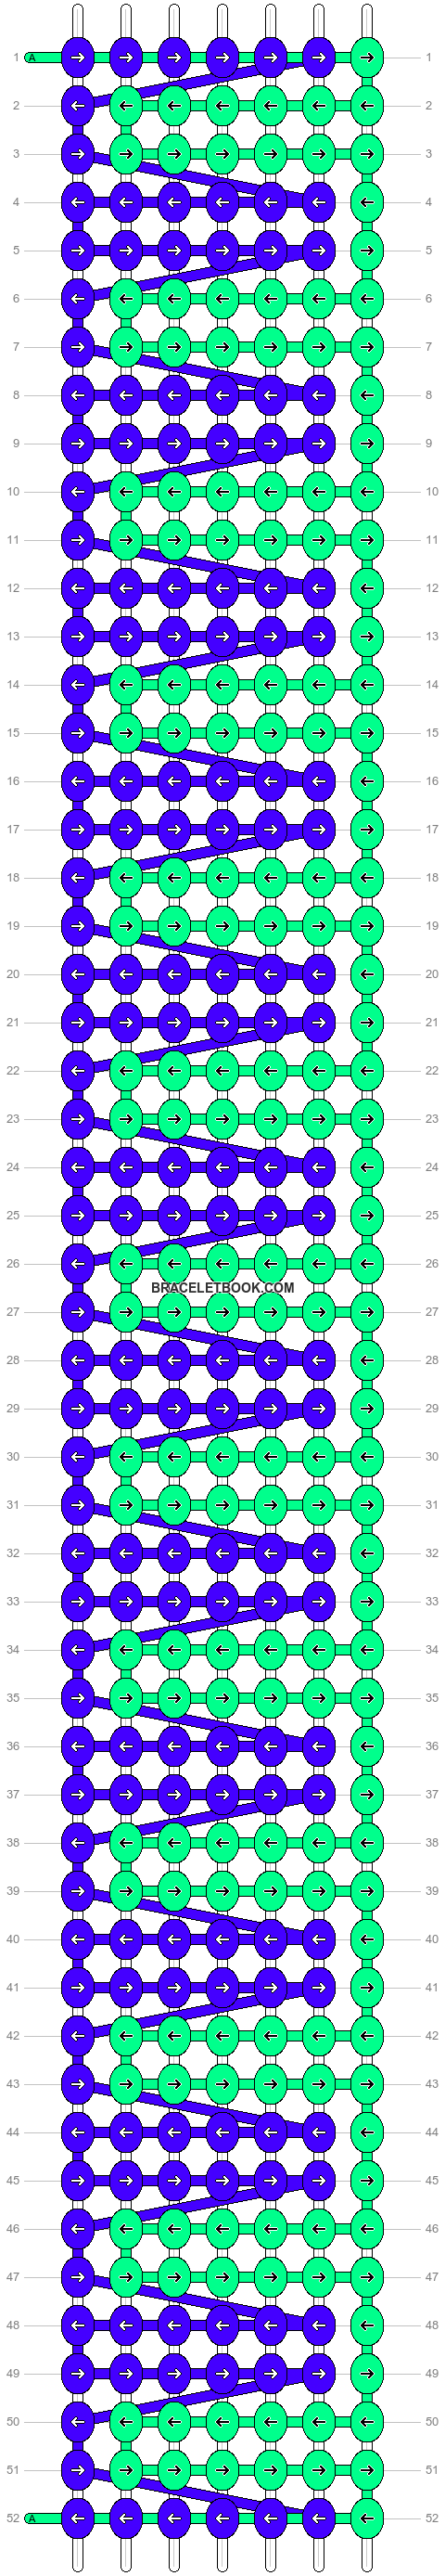 Alpha pattern #15234 variation #160041 pattern